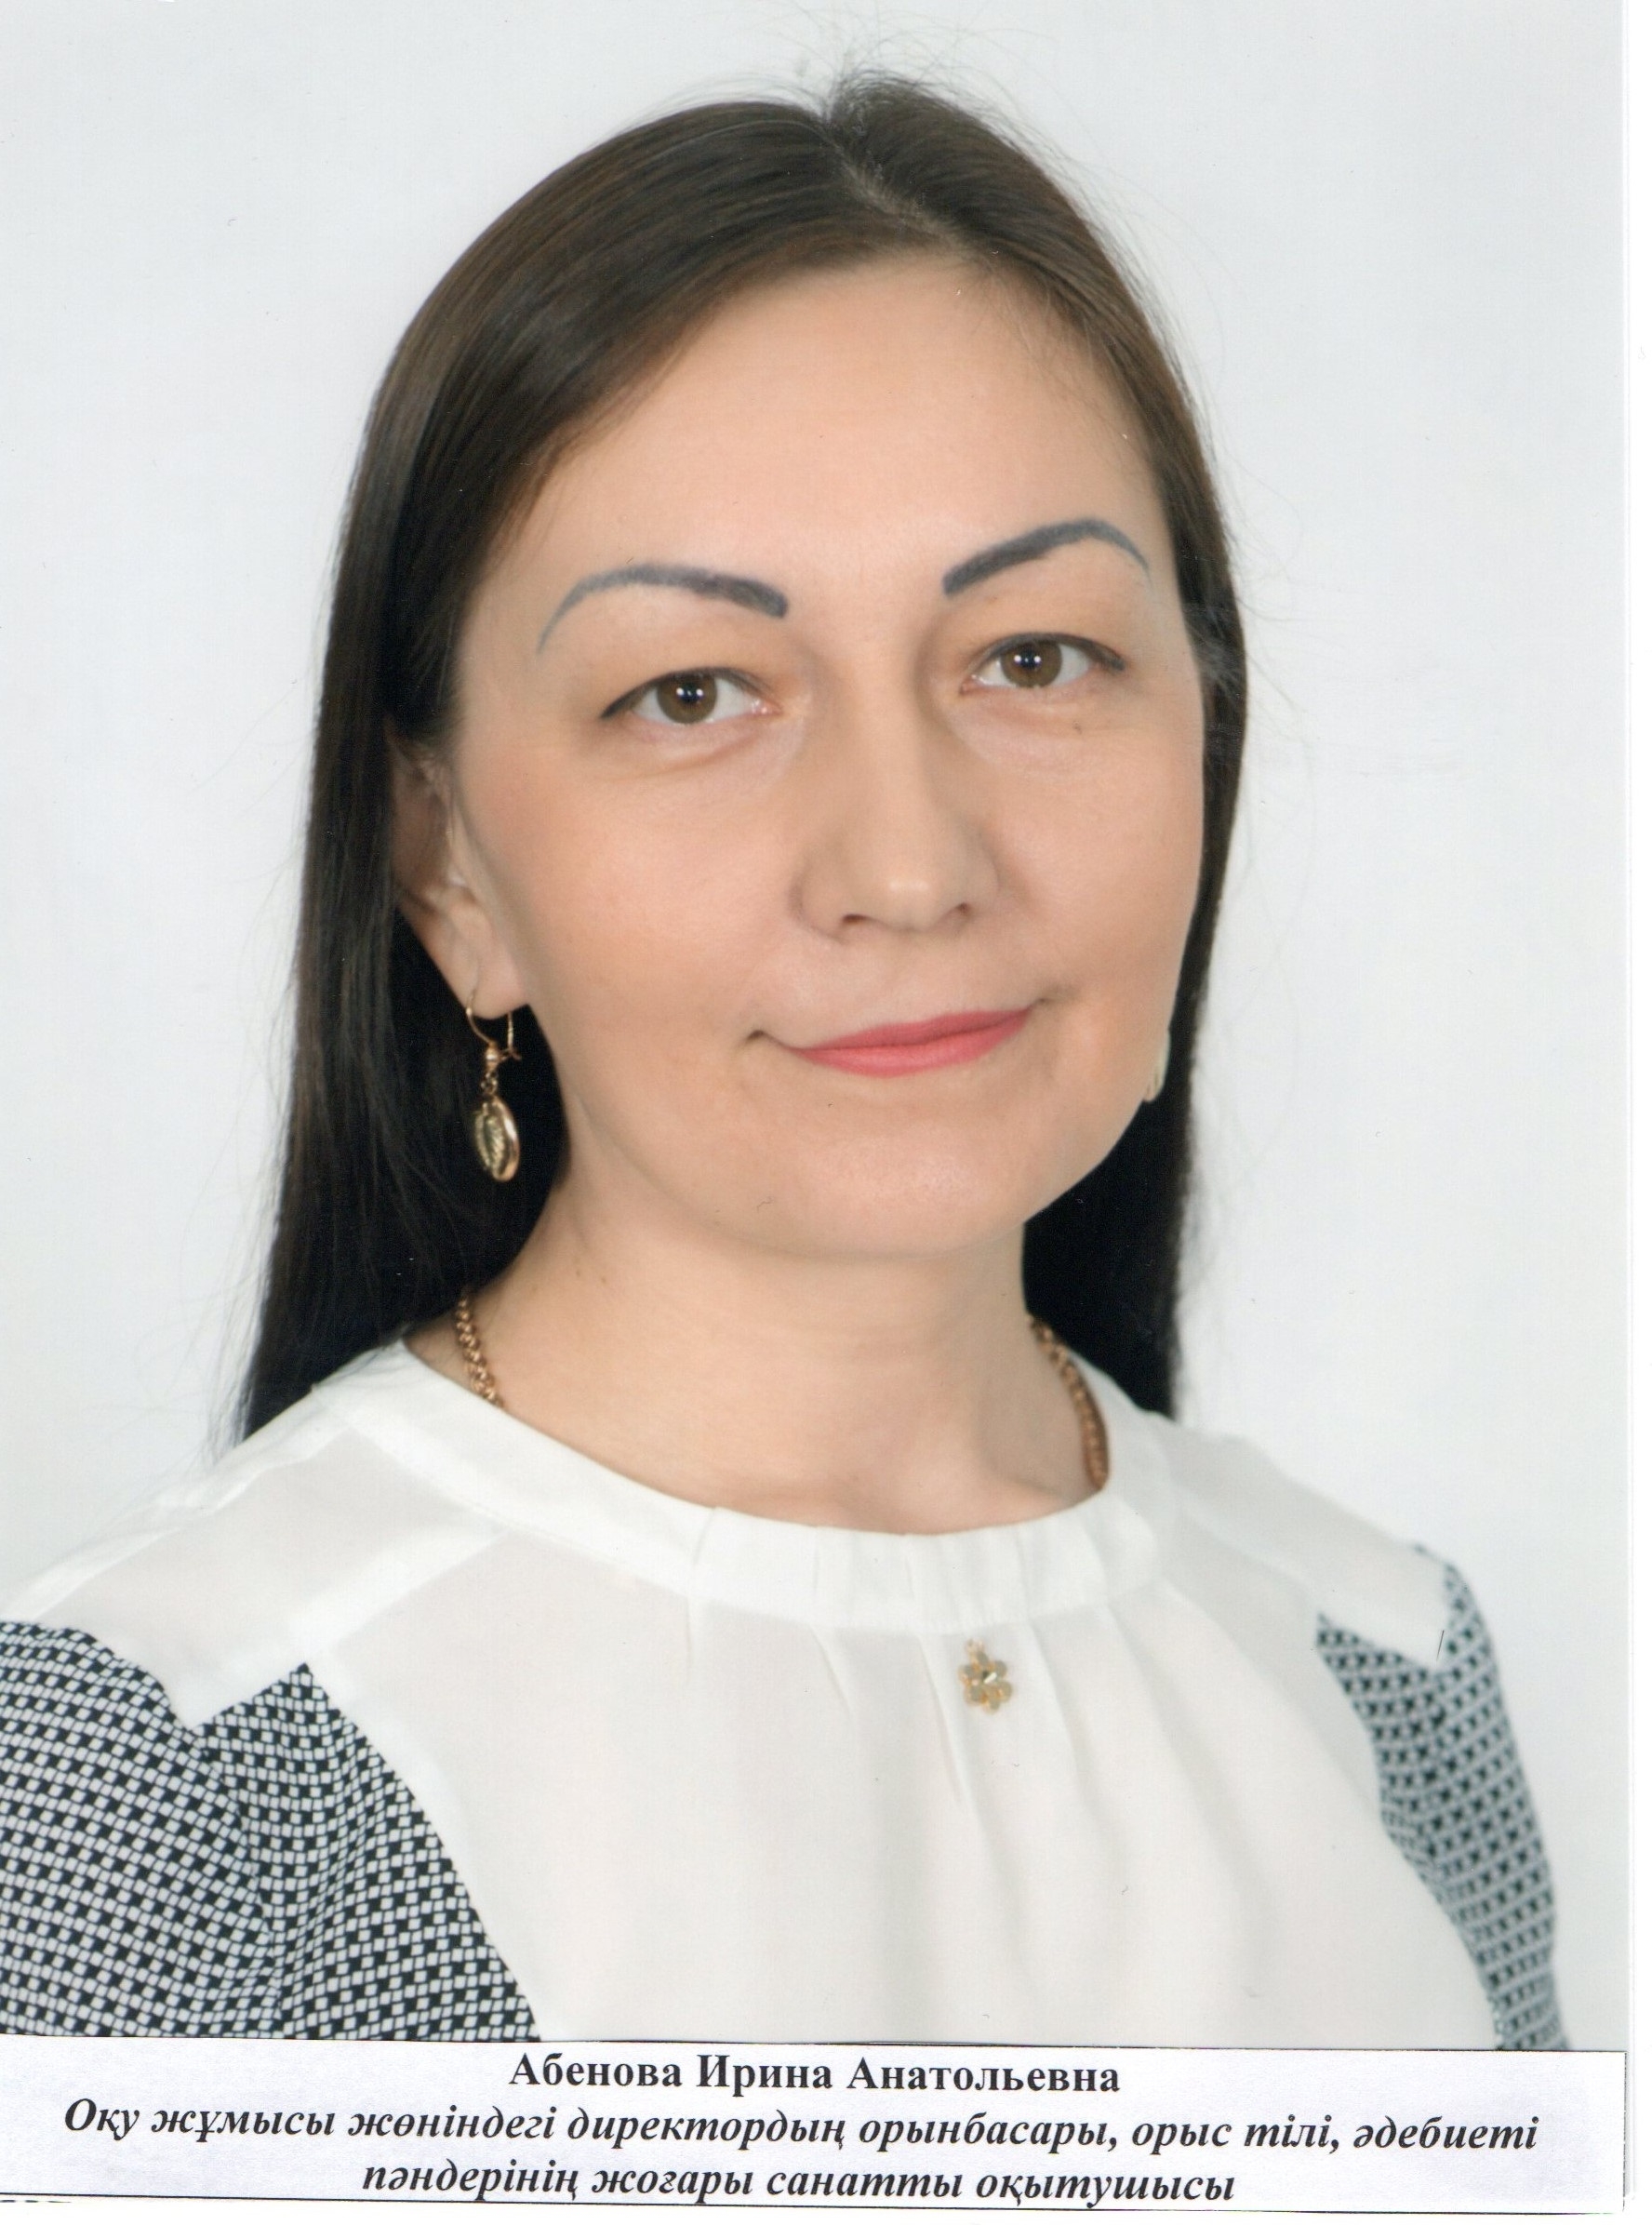 Абенова Ирина Анатольевна